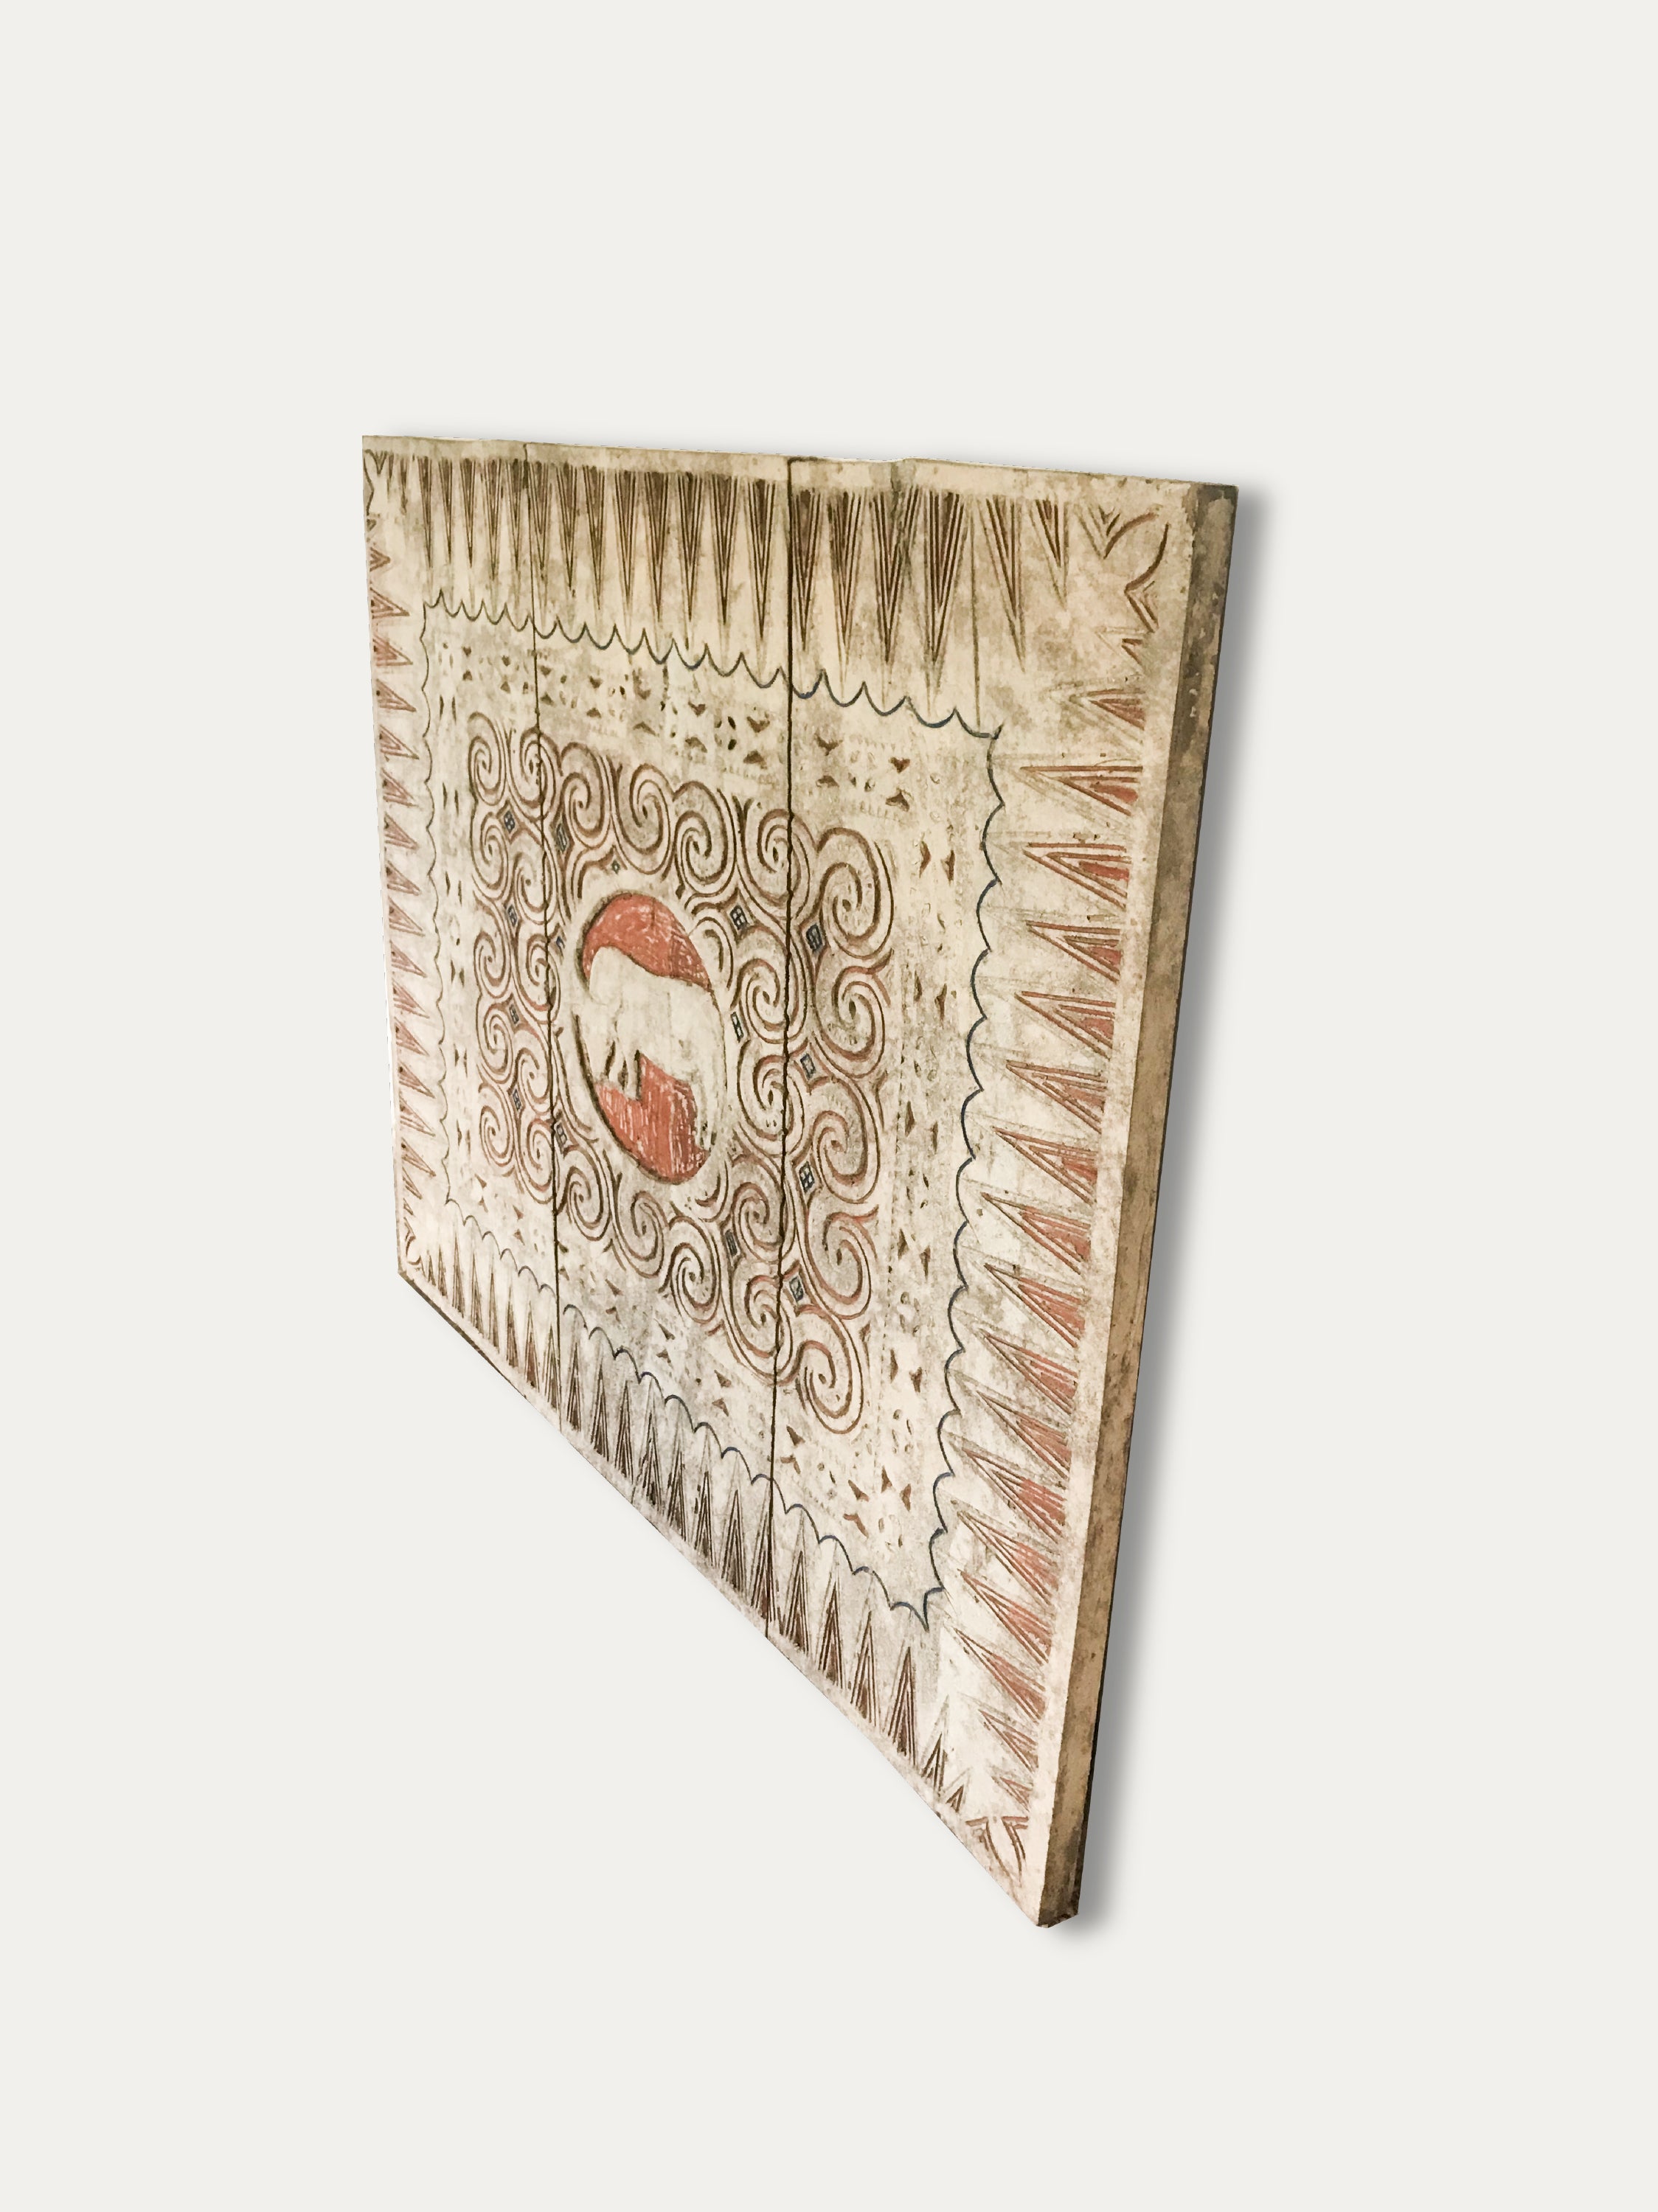 Large Wood Panel From Toraja - Asian Art from Kirschon